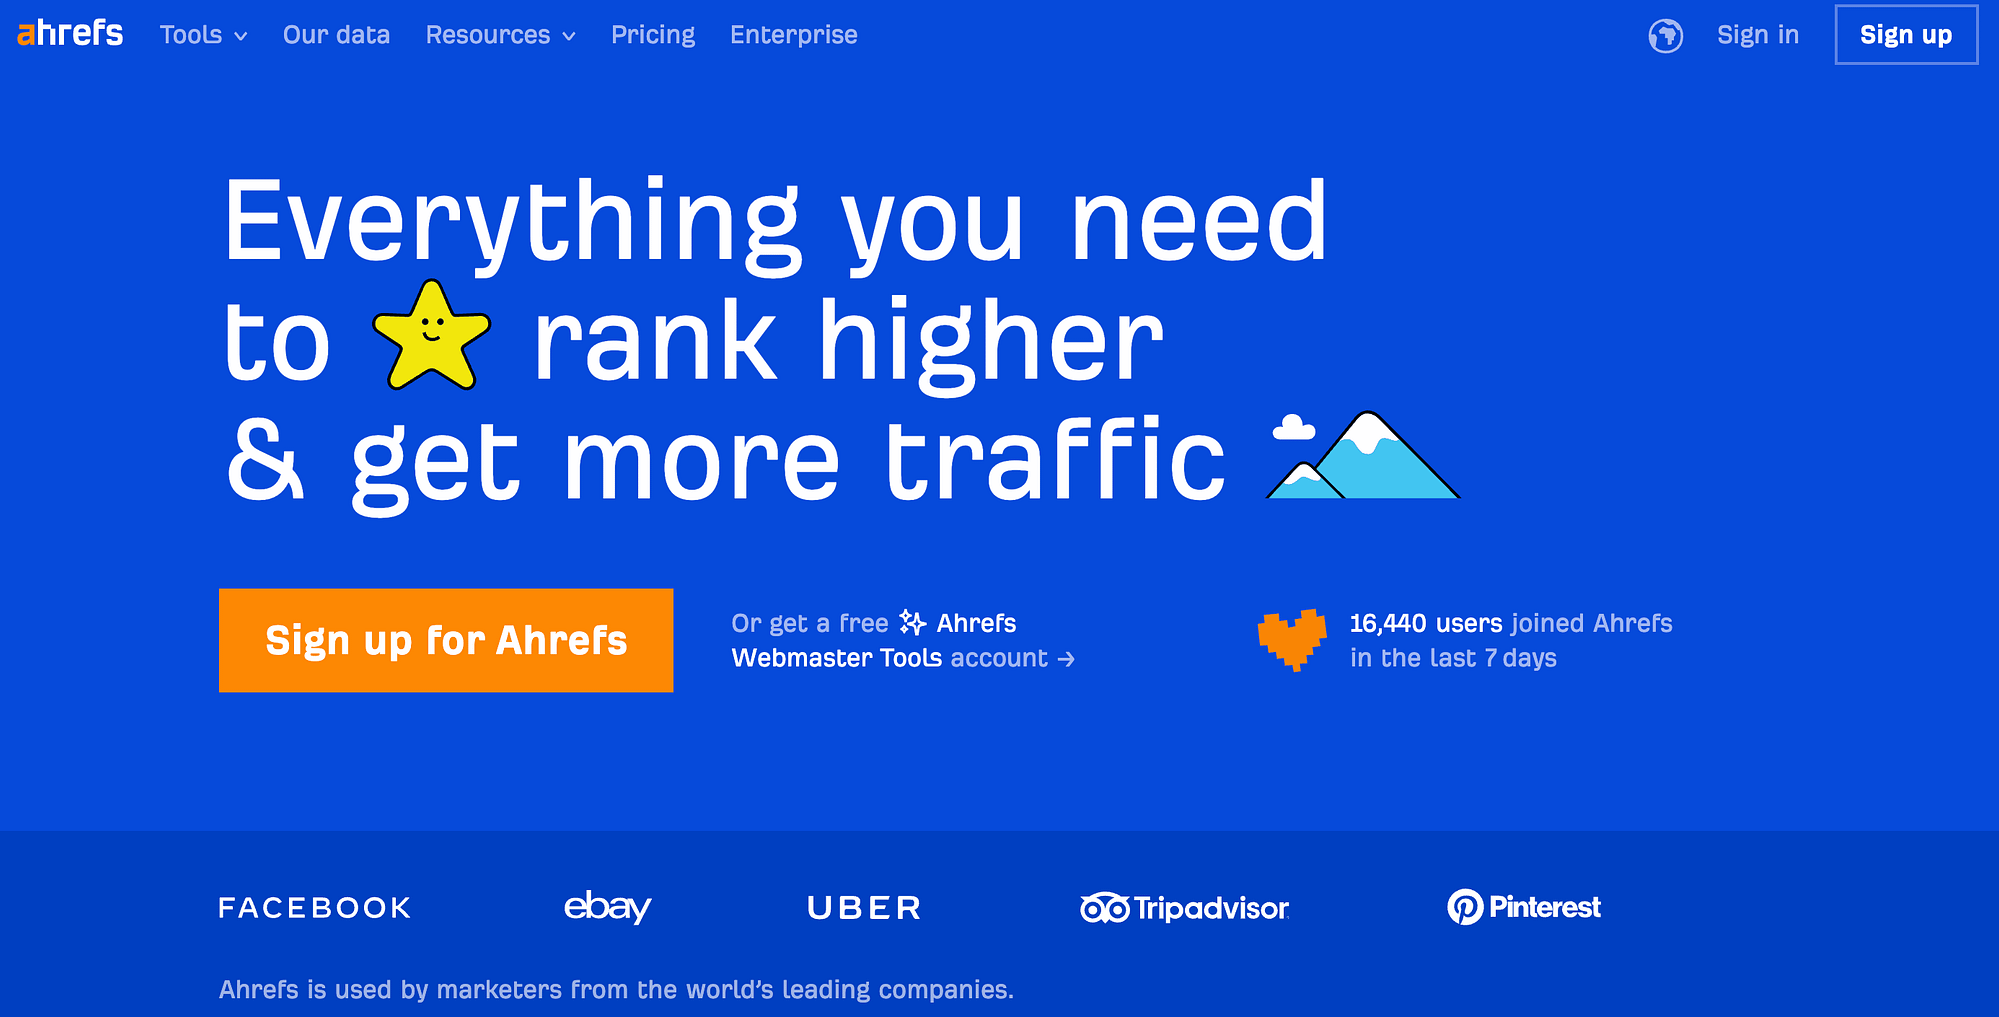 The ahrefs website